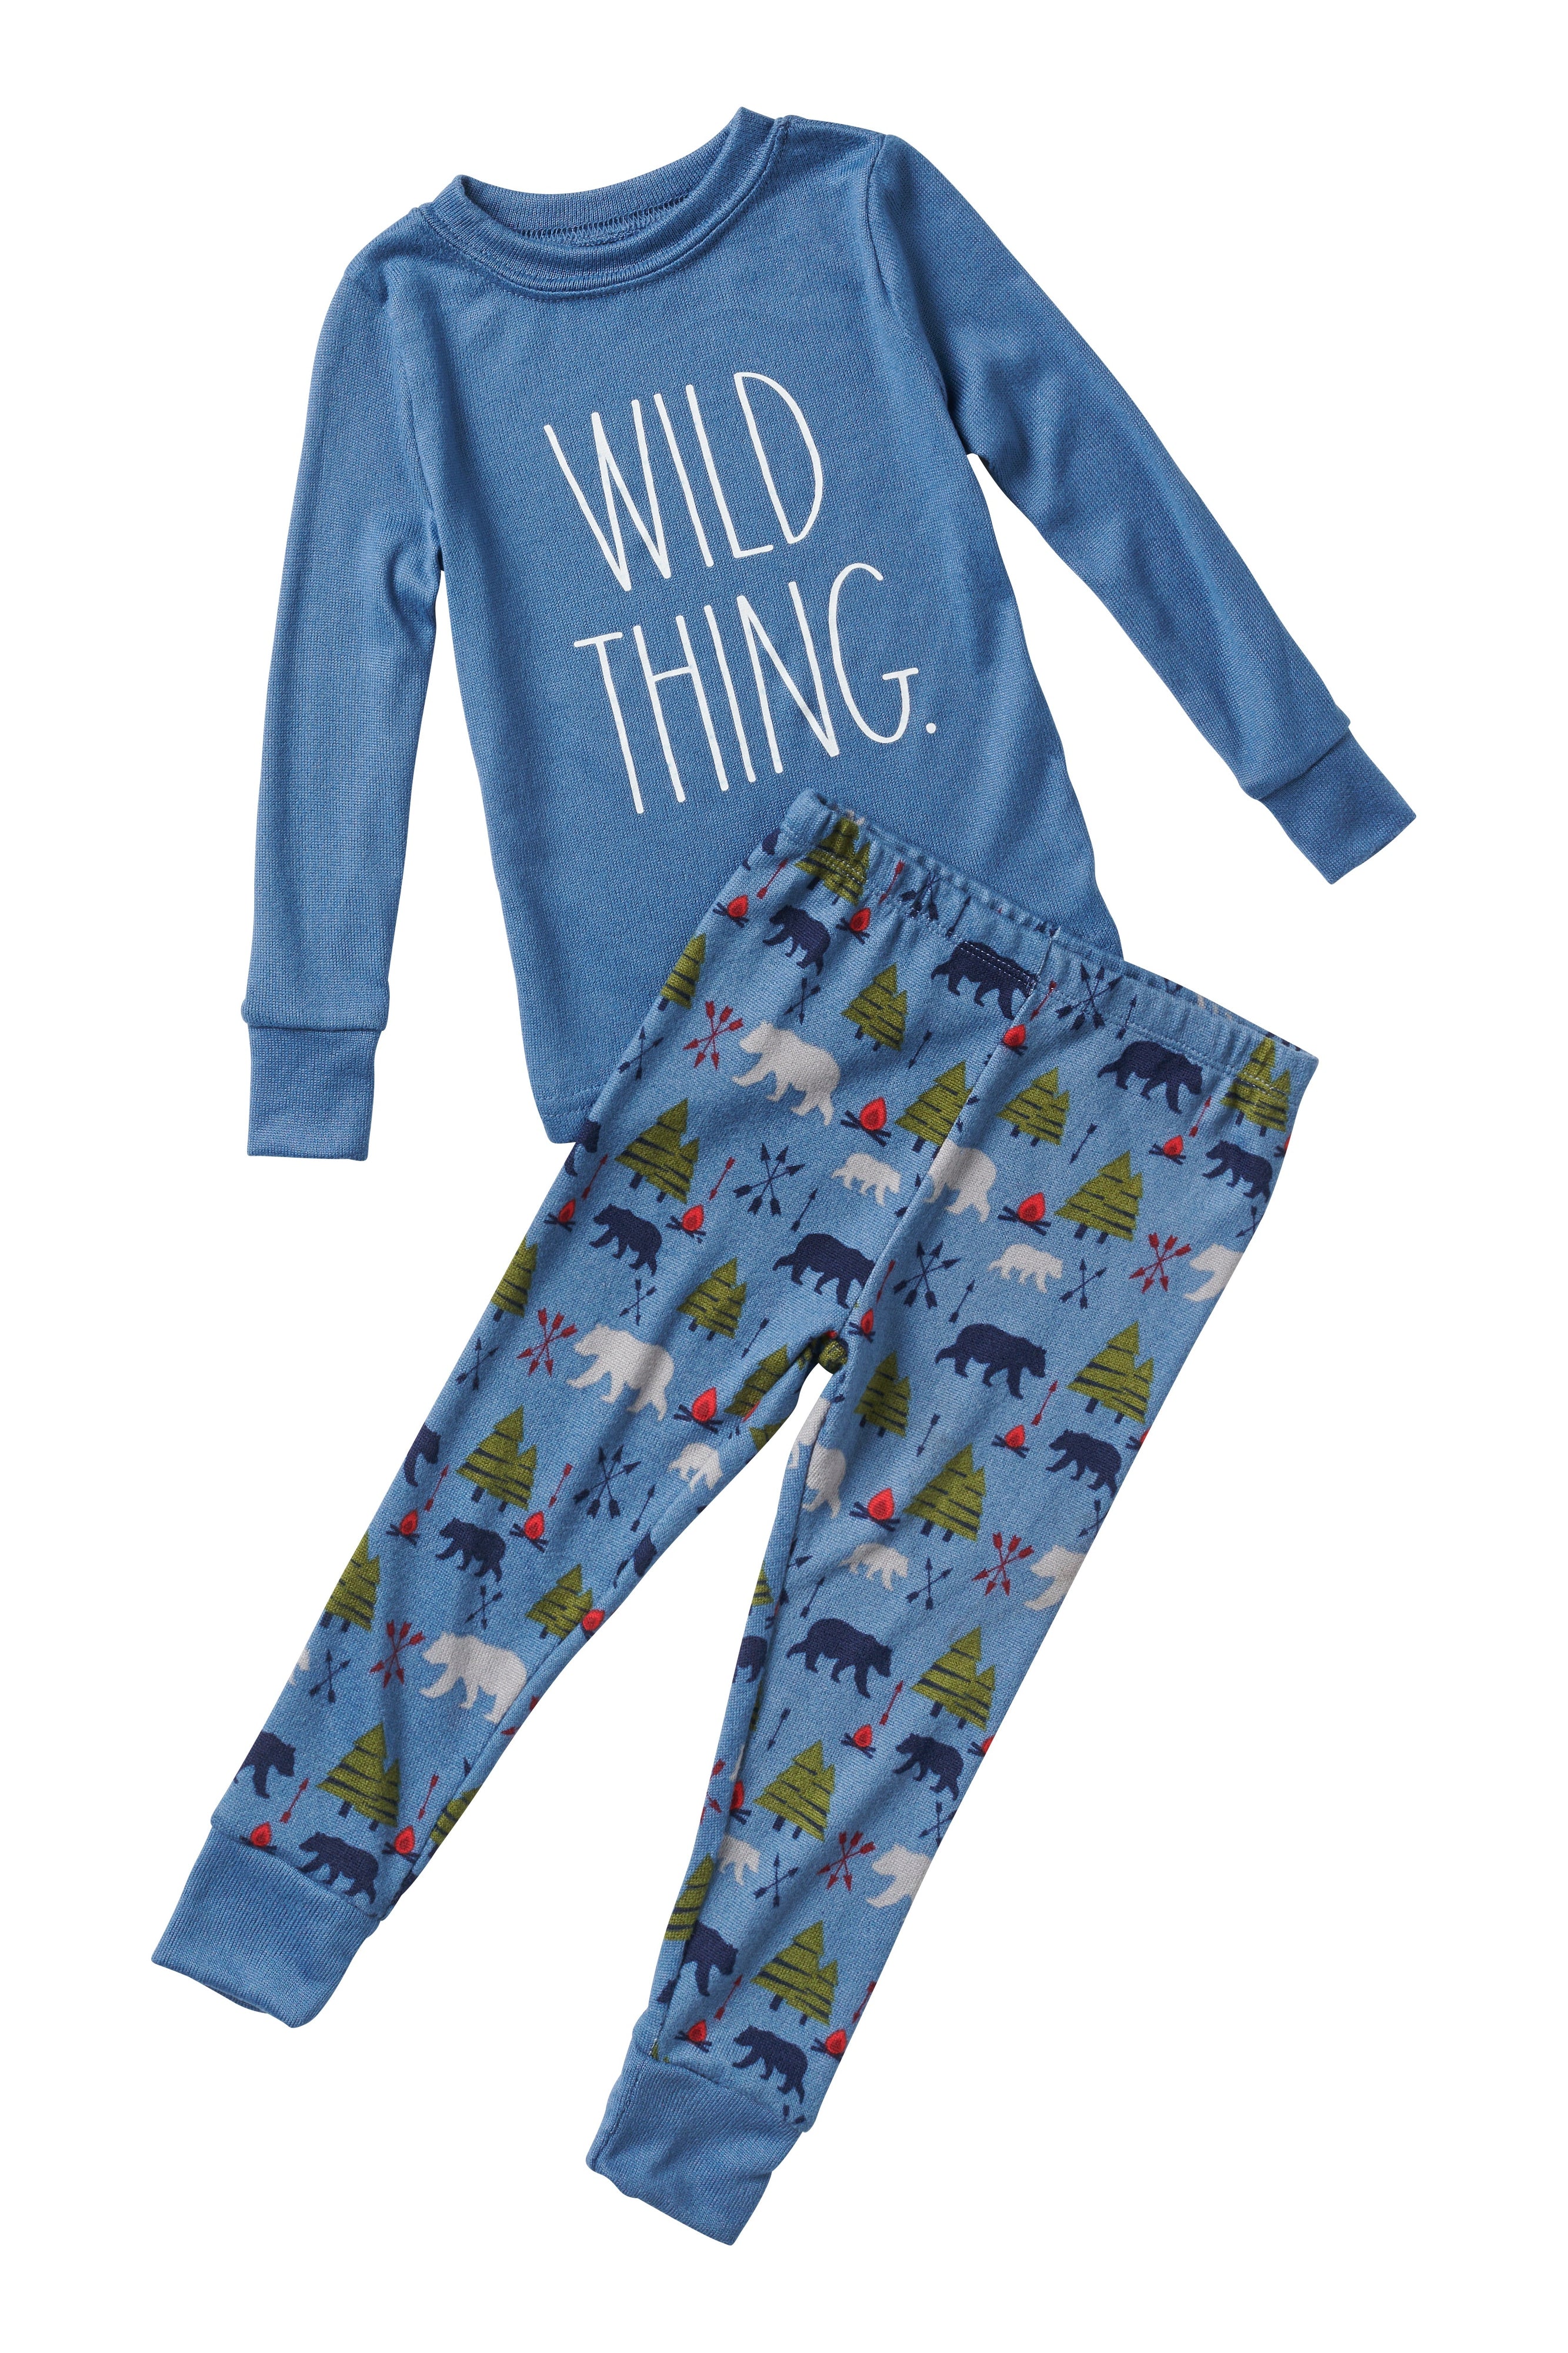 Boys' "WILD THING" Long Sleeve Top and Joggers Pajama Set - Rae Dunn Wear